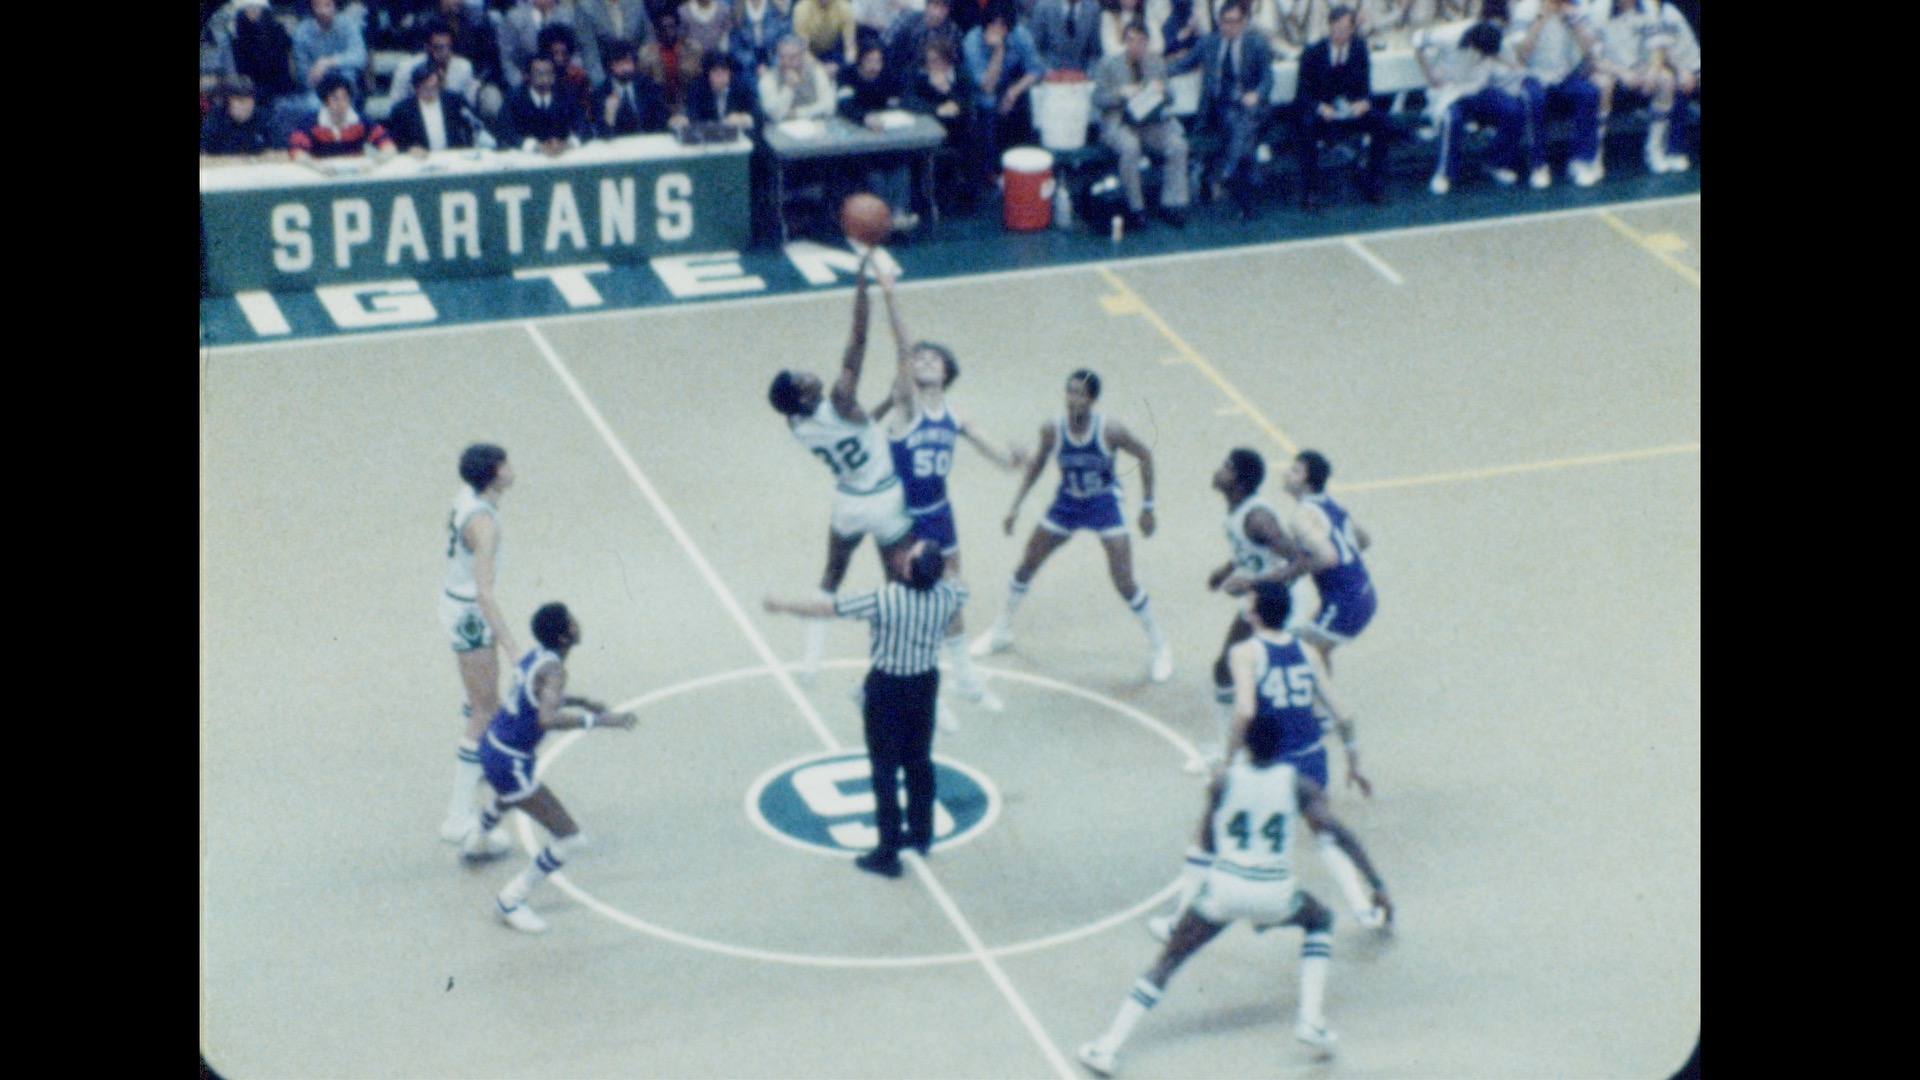 MSU Basketball vs. Northwestern (home), 1978